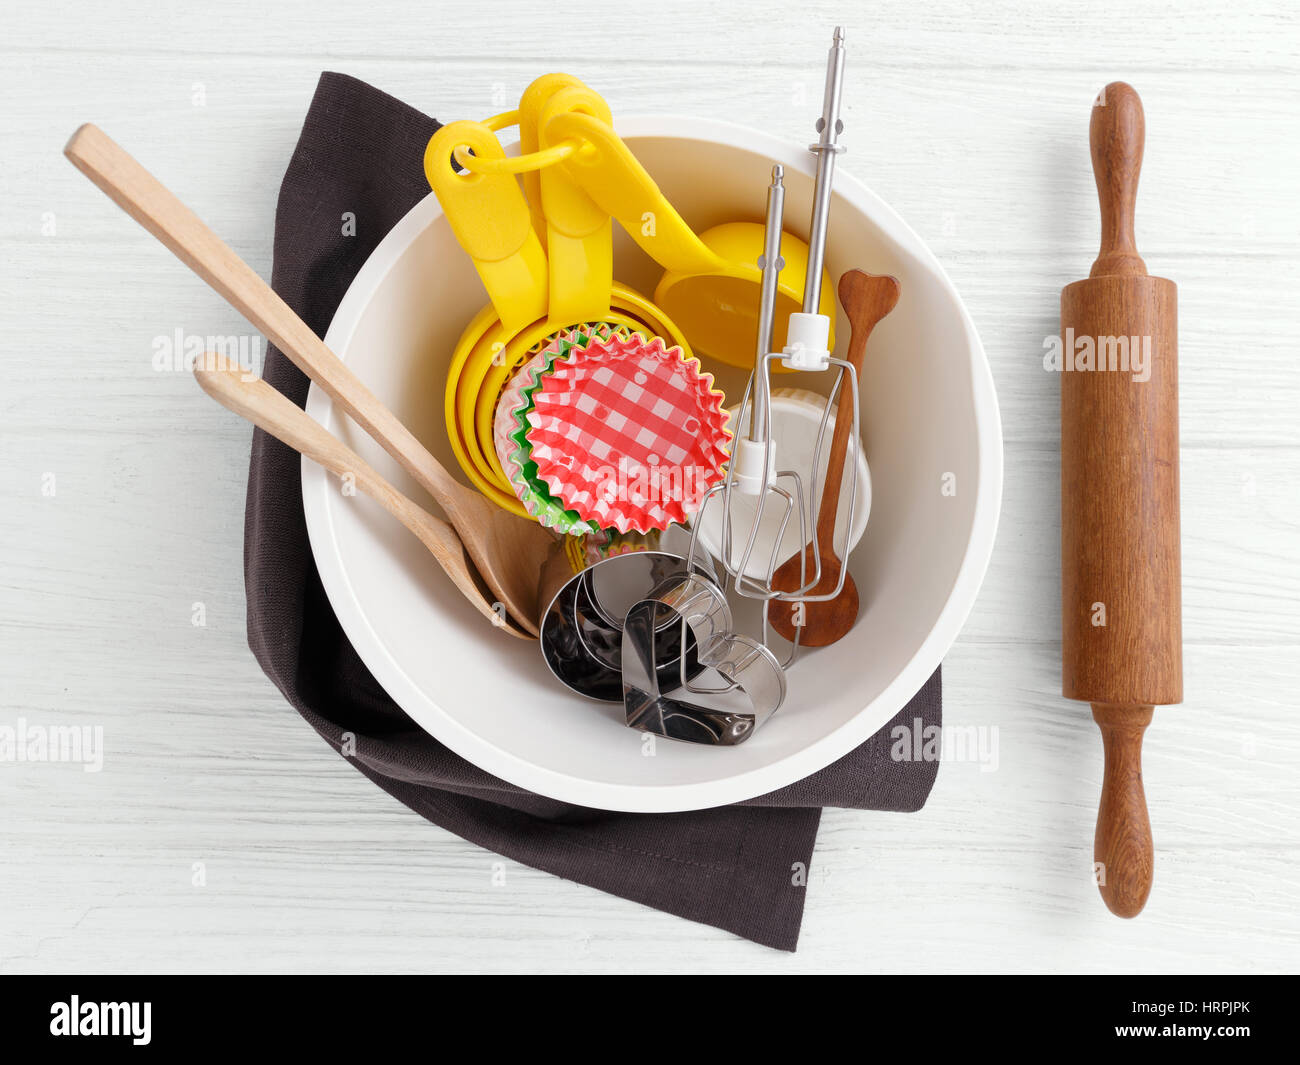 https://c8.alamy.com/comp/HRPJPK/baking-tools-and-utensils-in-mixing-bowl-on-white-wooden-background-HRPJPK.jpg